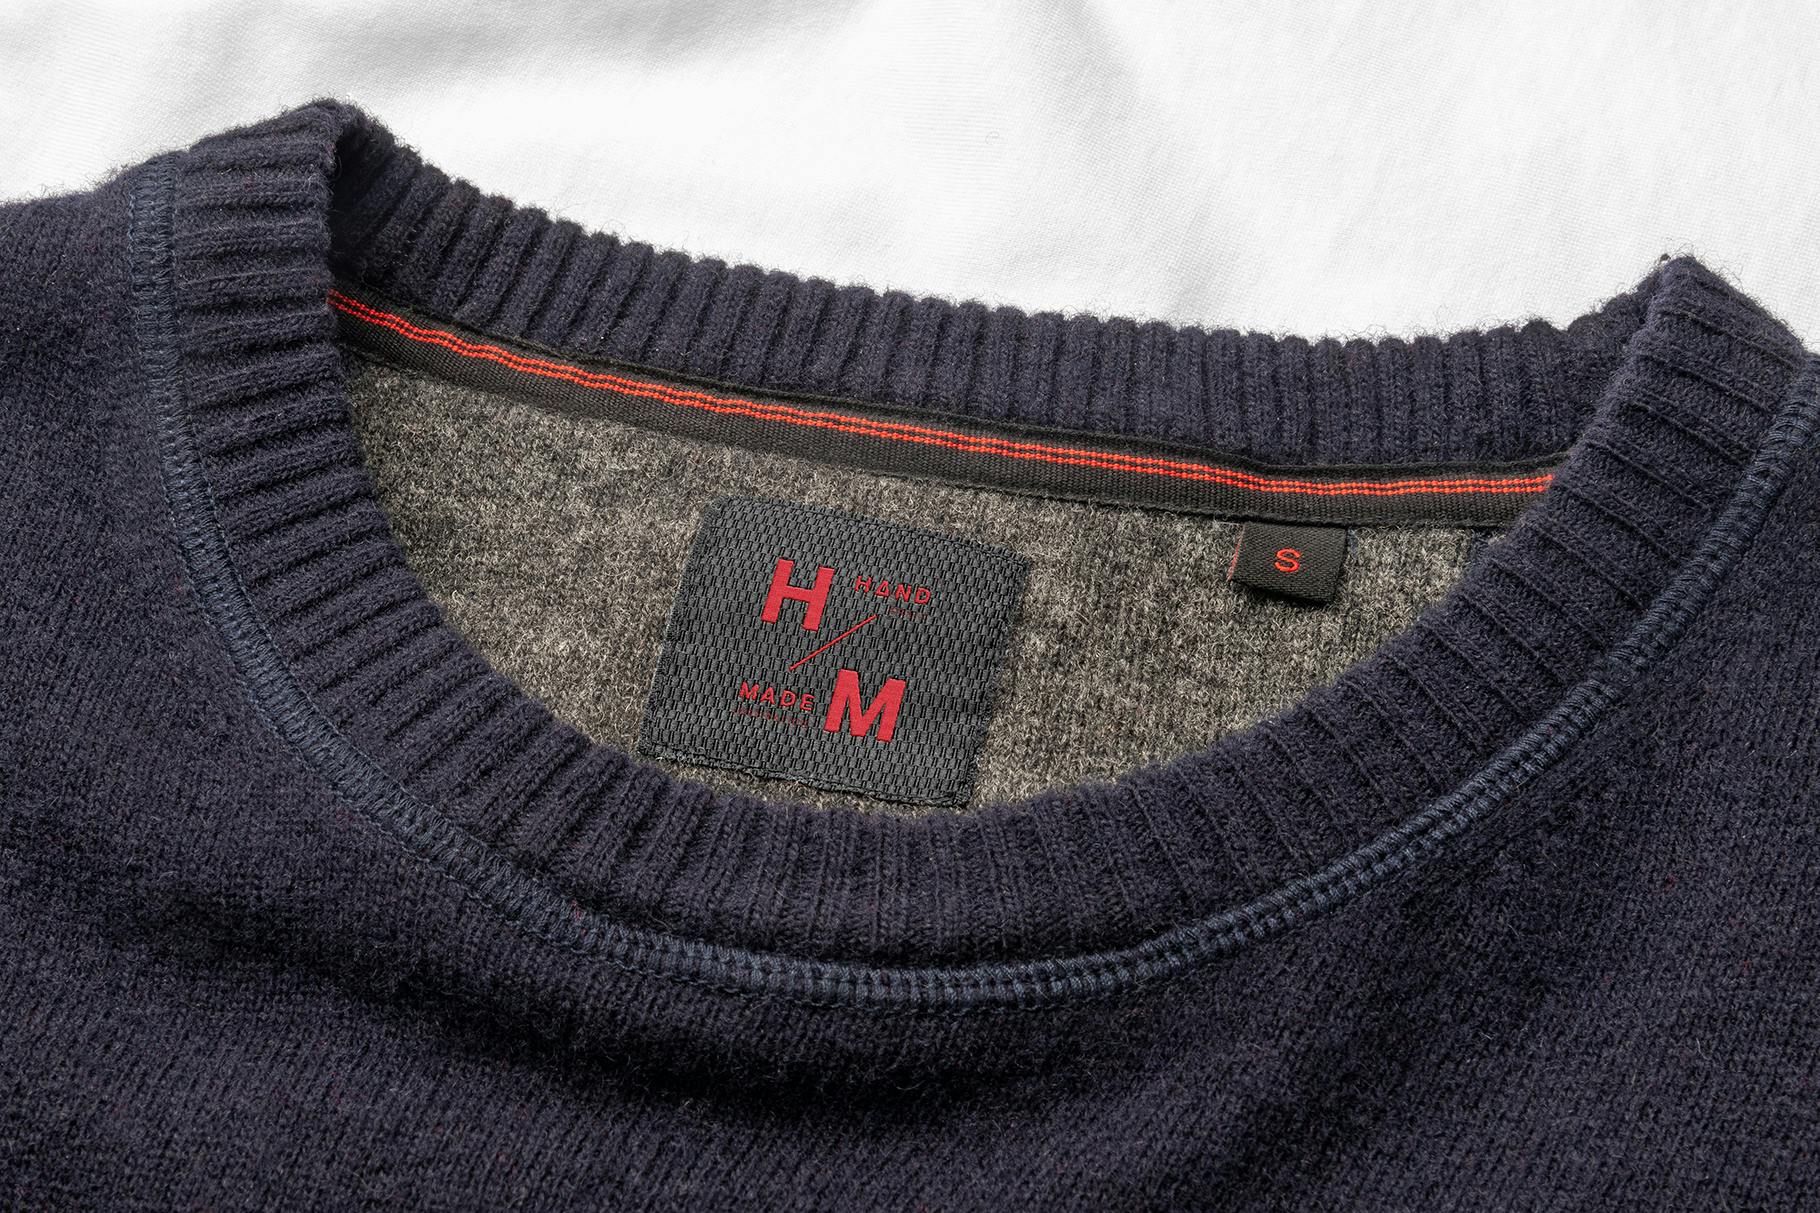 Wool Sweater Neck Label Mockup Scene 04 | Premium & Free PSD